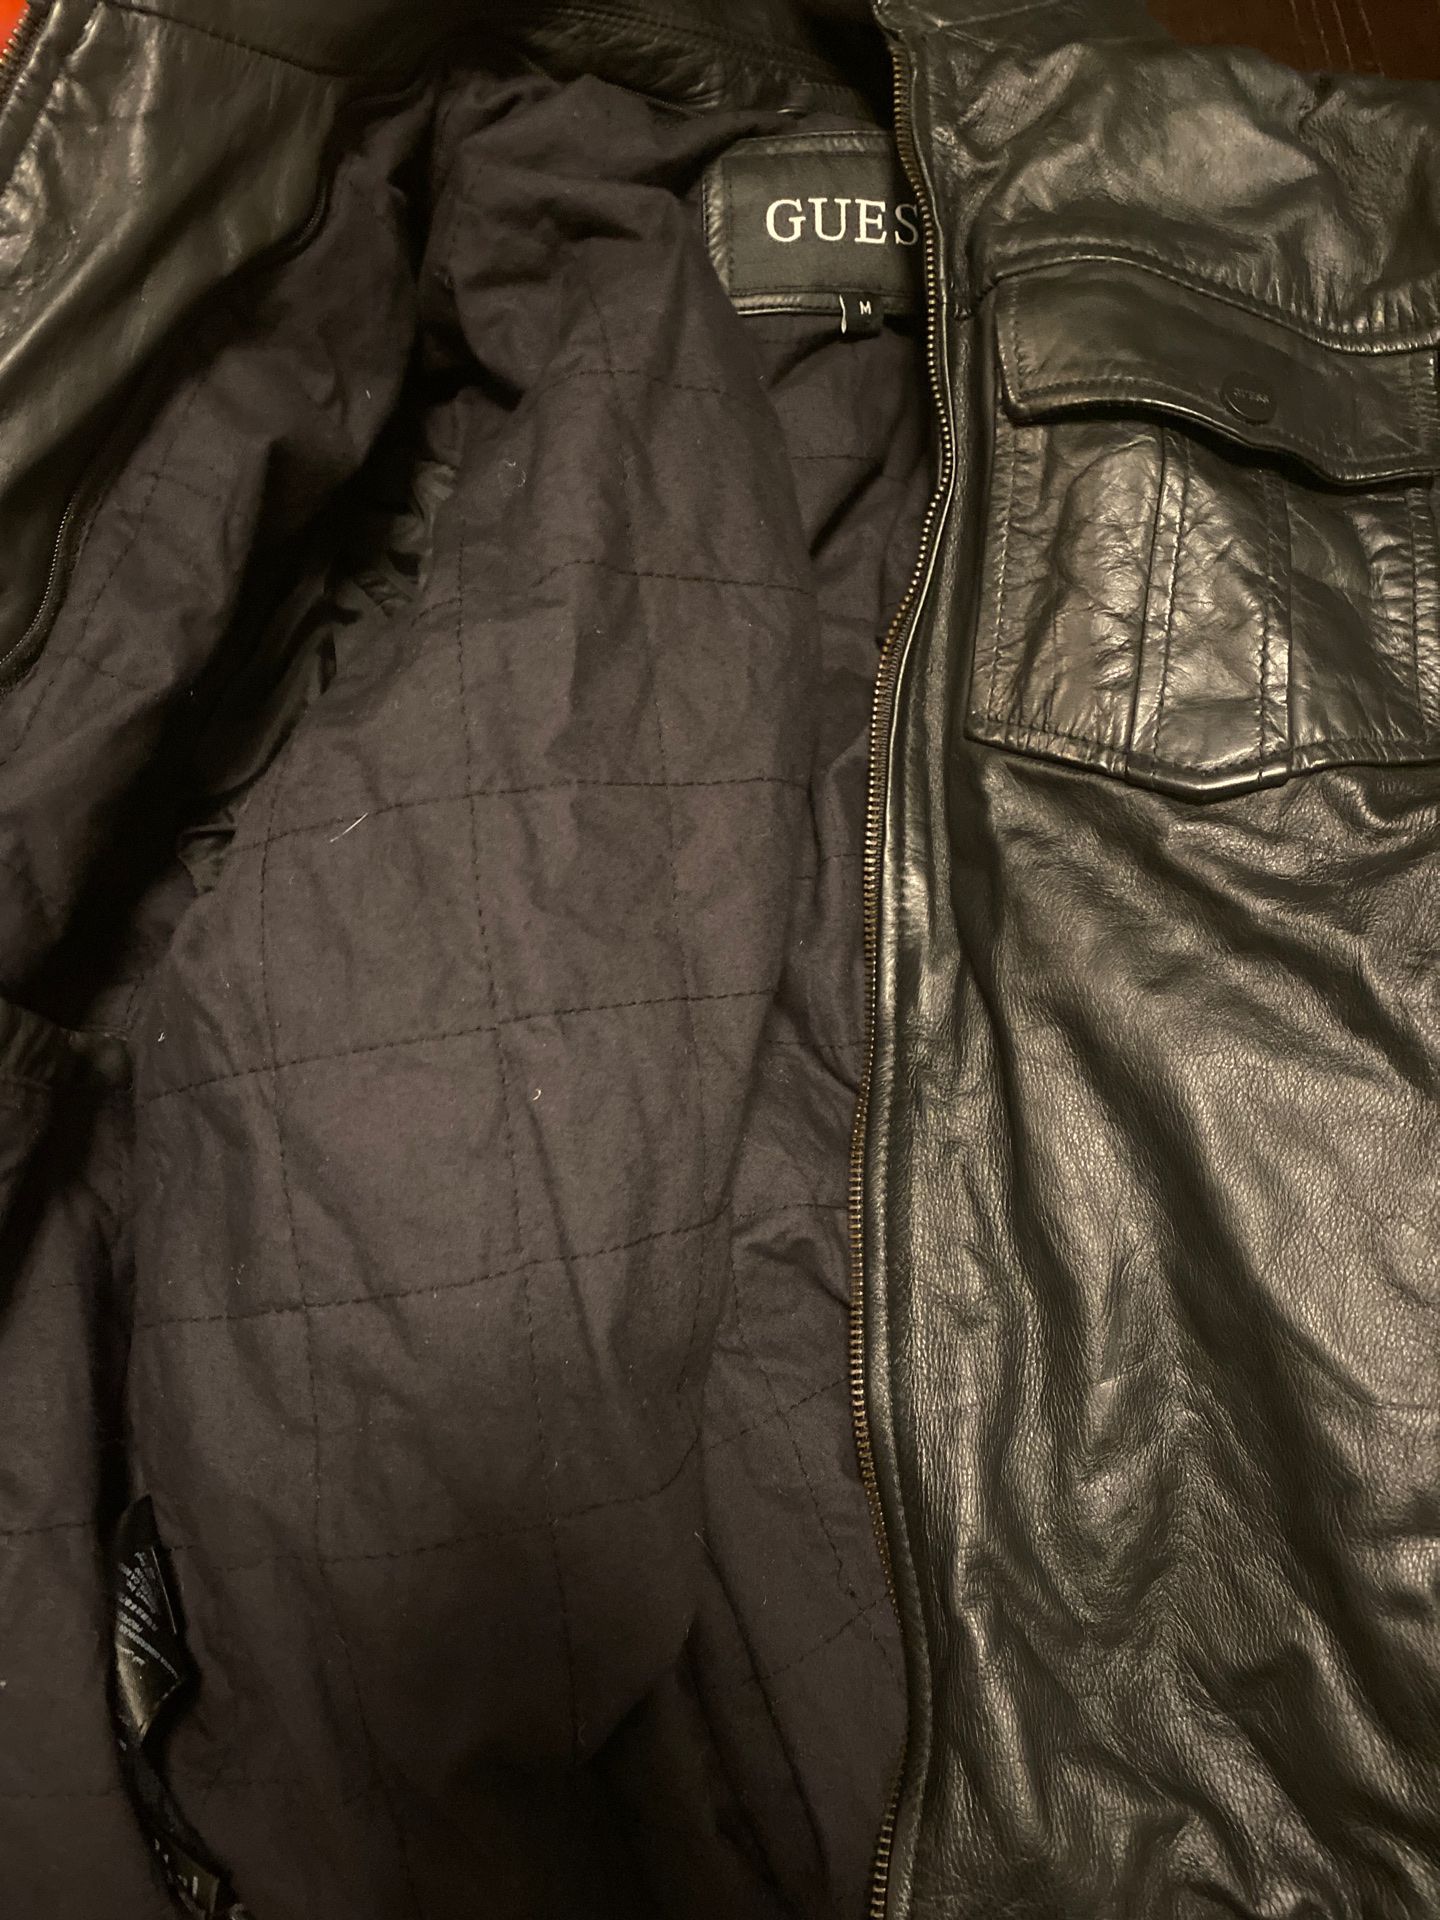 Guess leather jacket (medium)